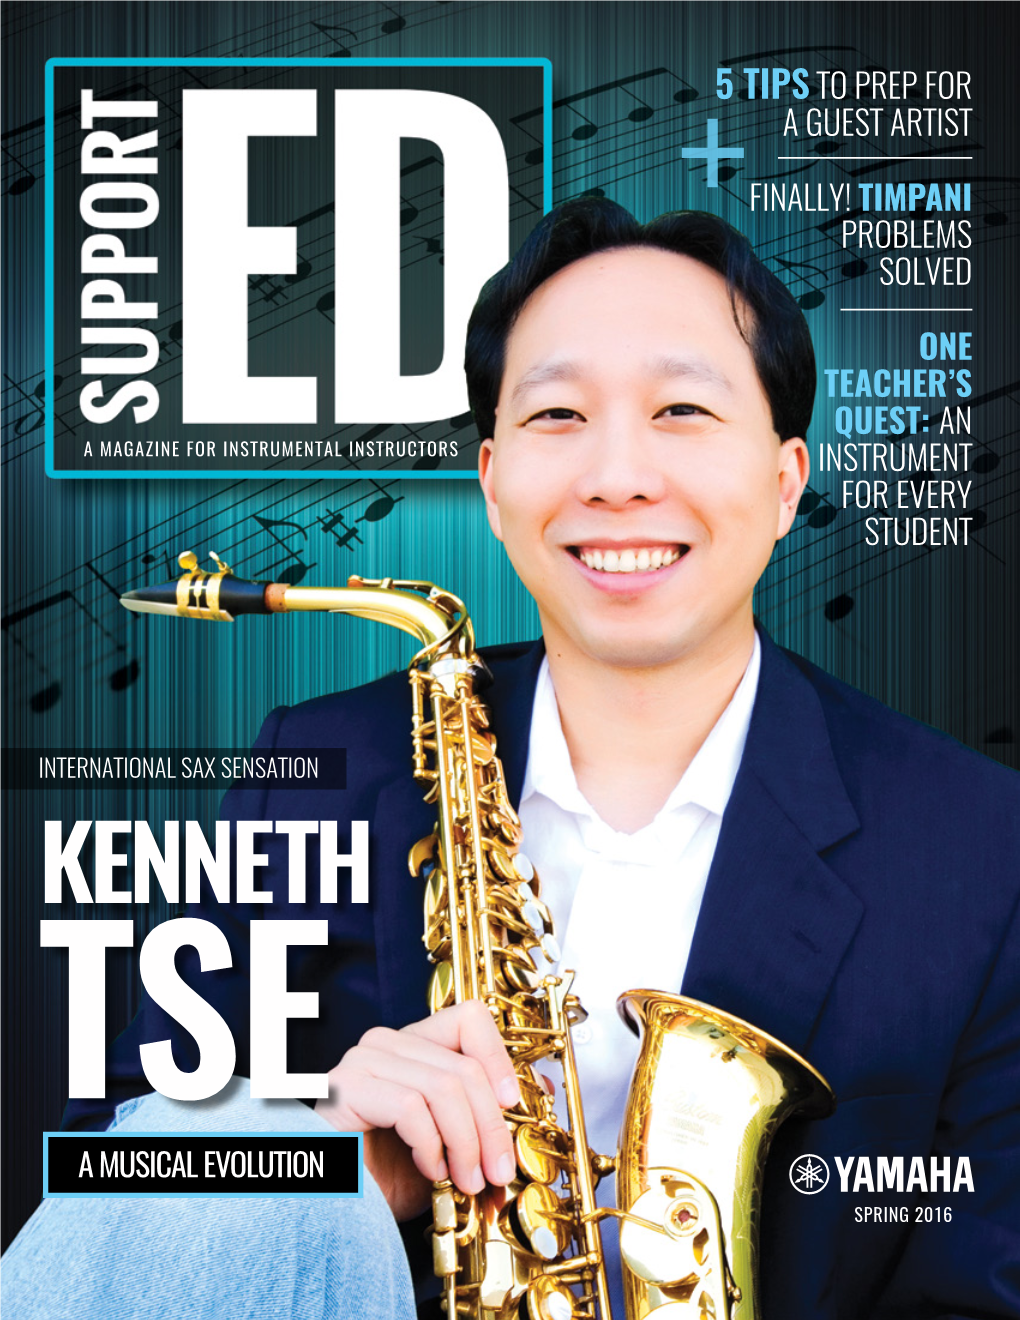 Kenneth Tse a Musical Evolution